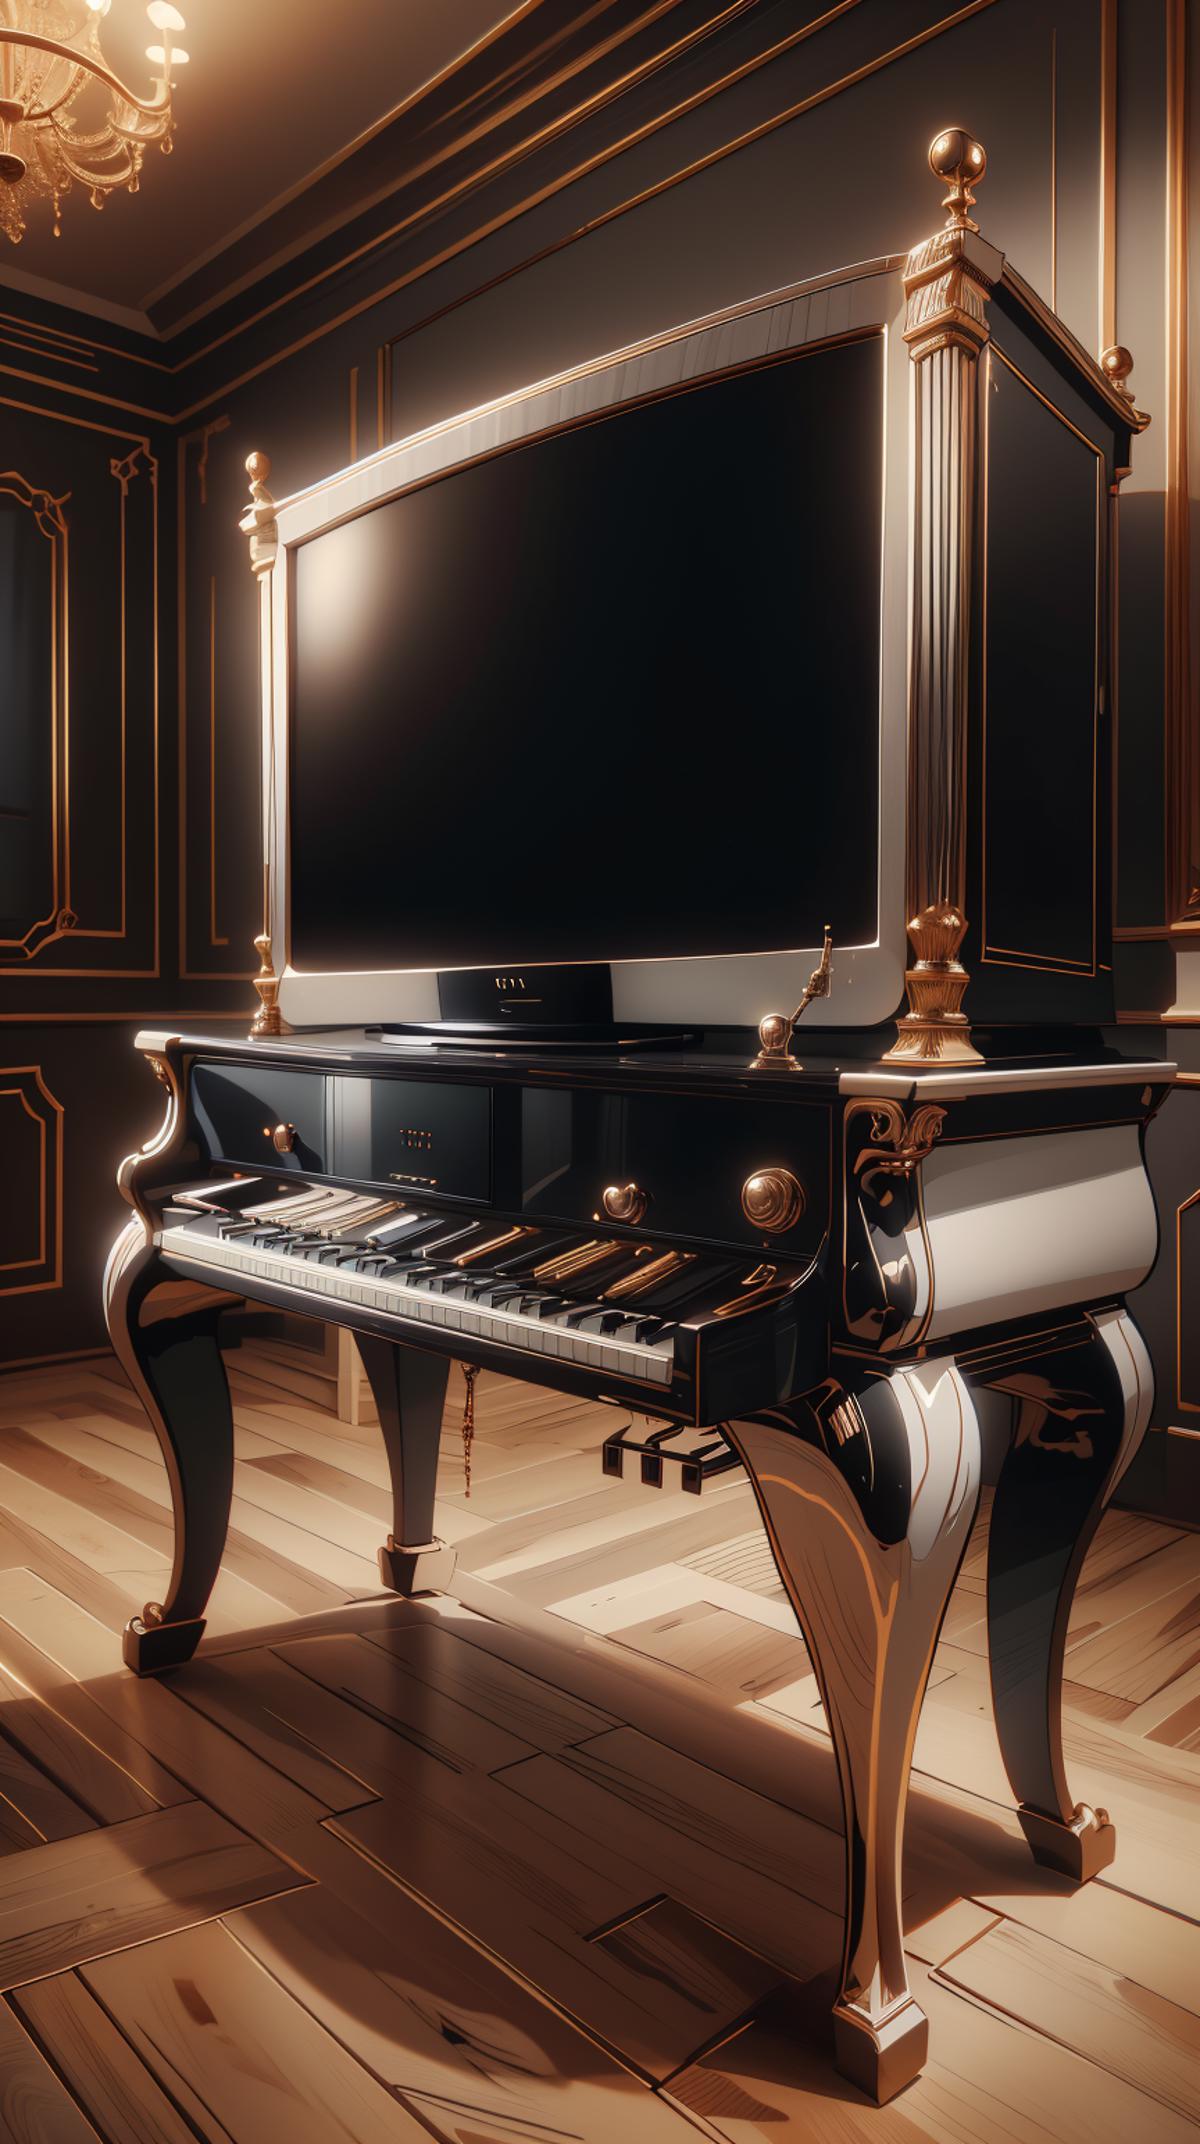 Piano Style - Ebony & Ivory Aesthetic image by mnemic